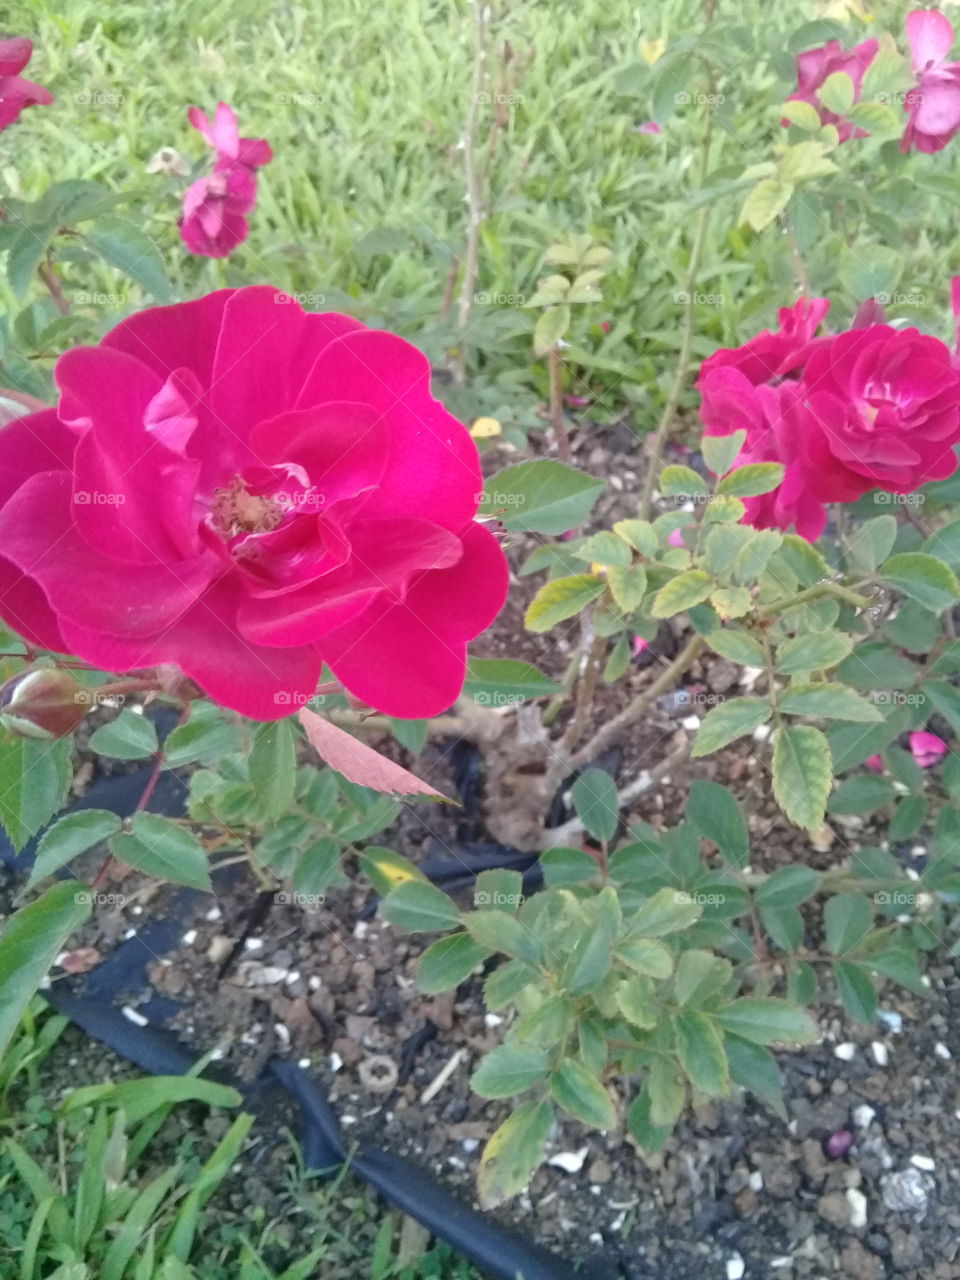 🌹 🌹 🌹🌹 light rose, natural color, beautiful pink roses.